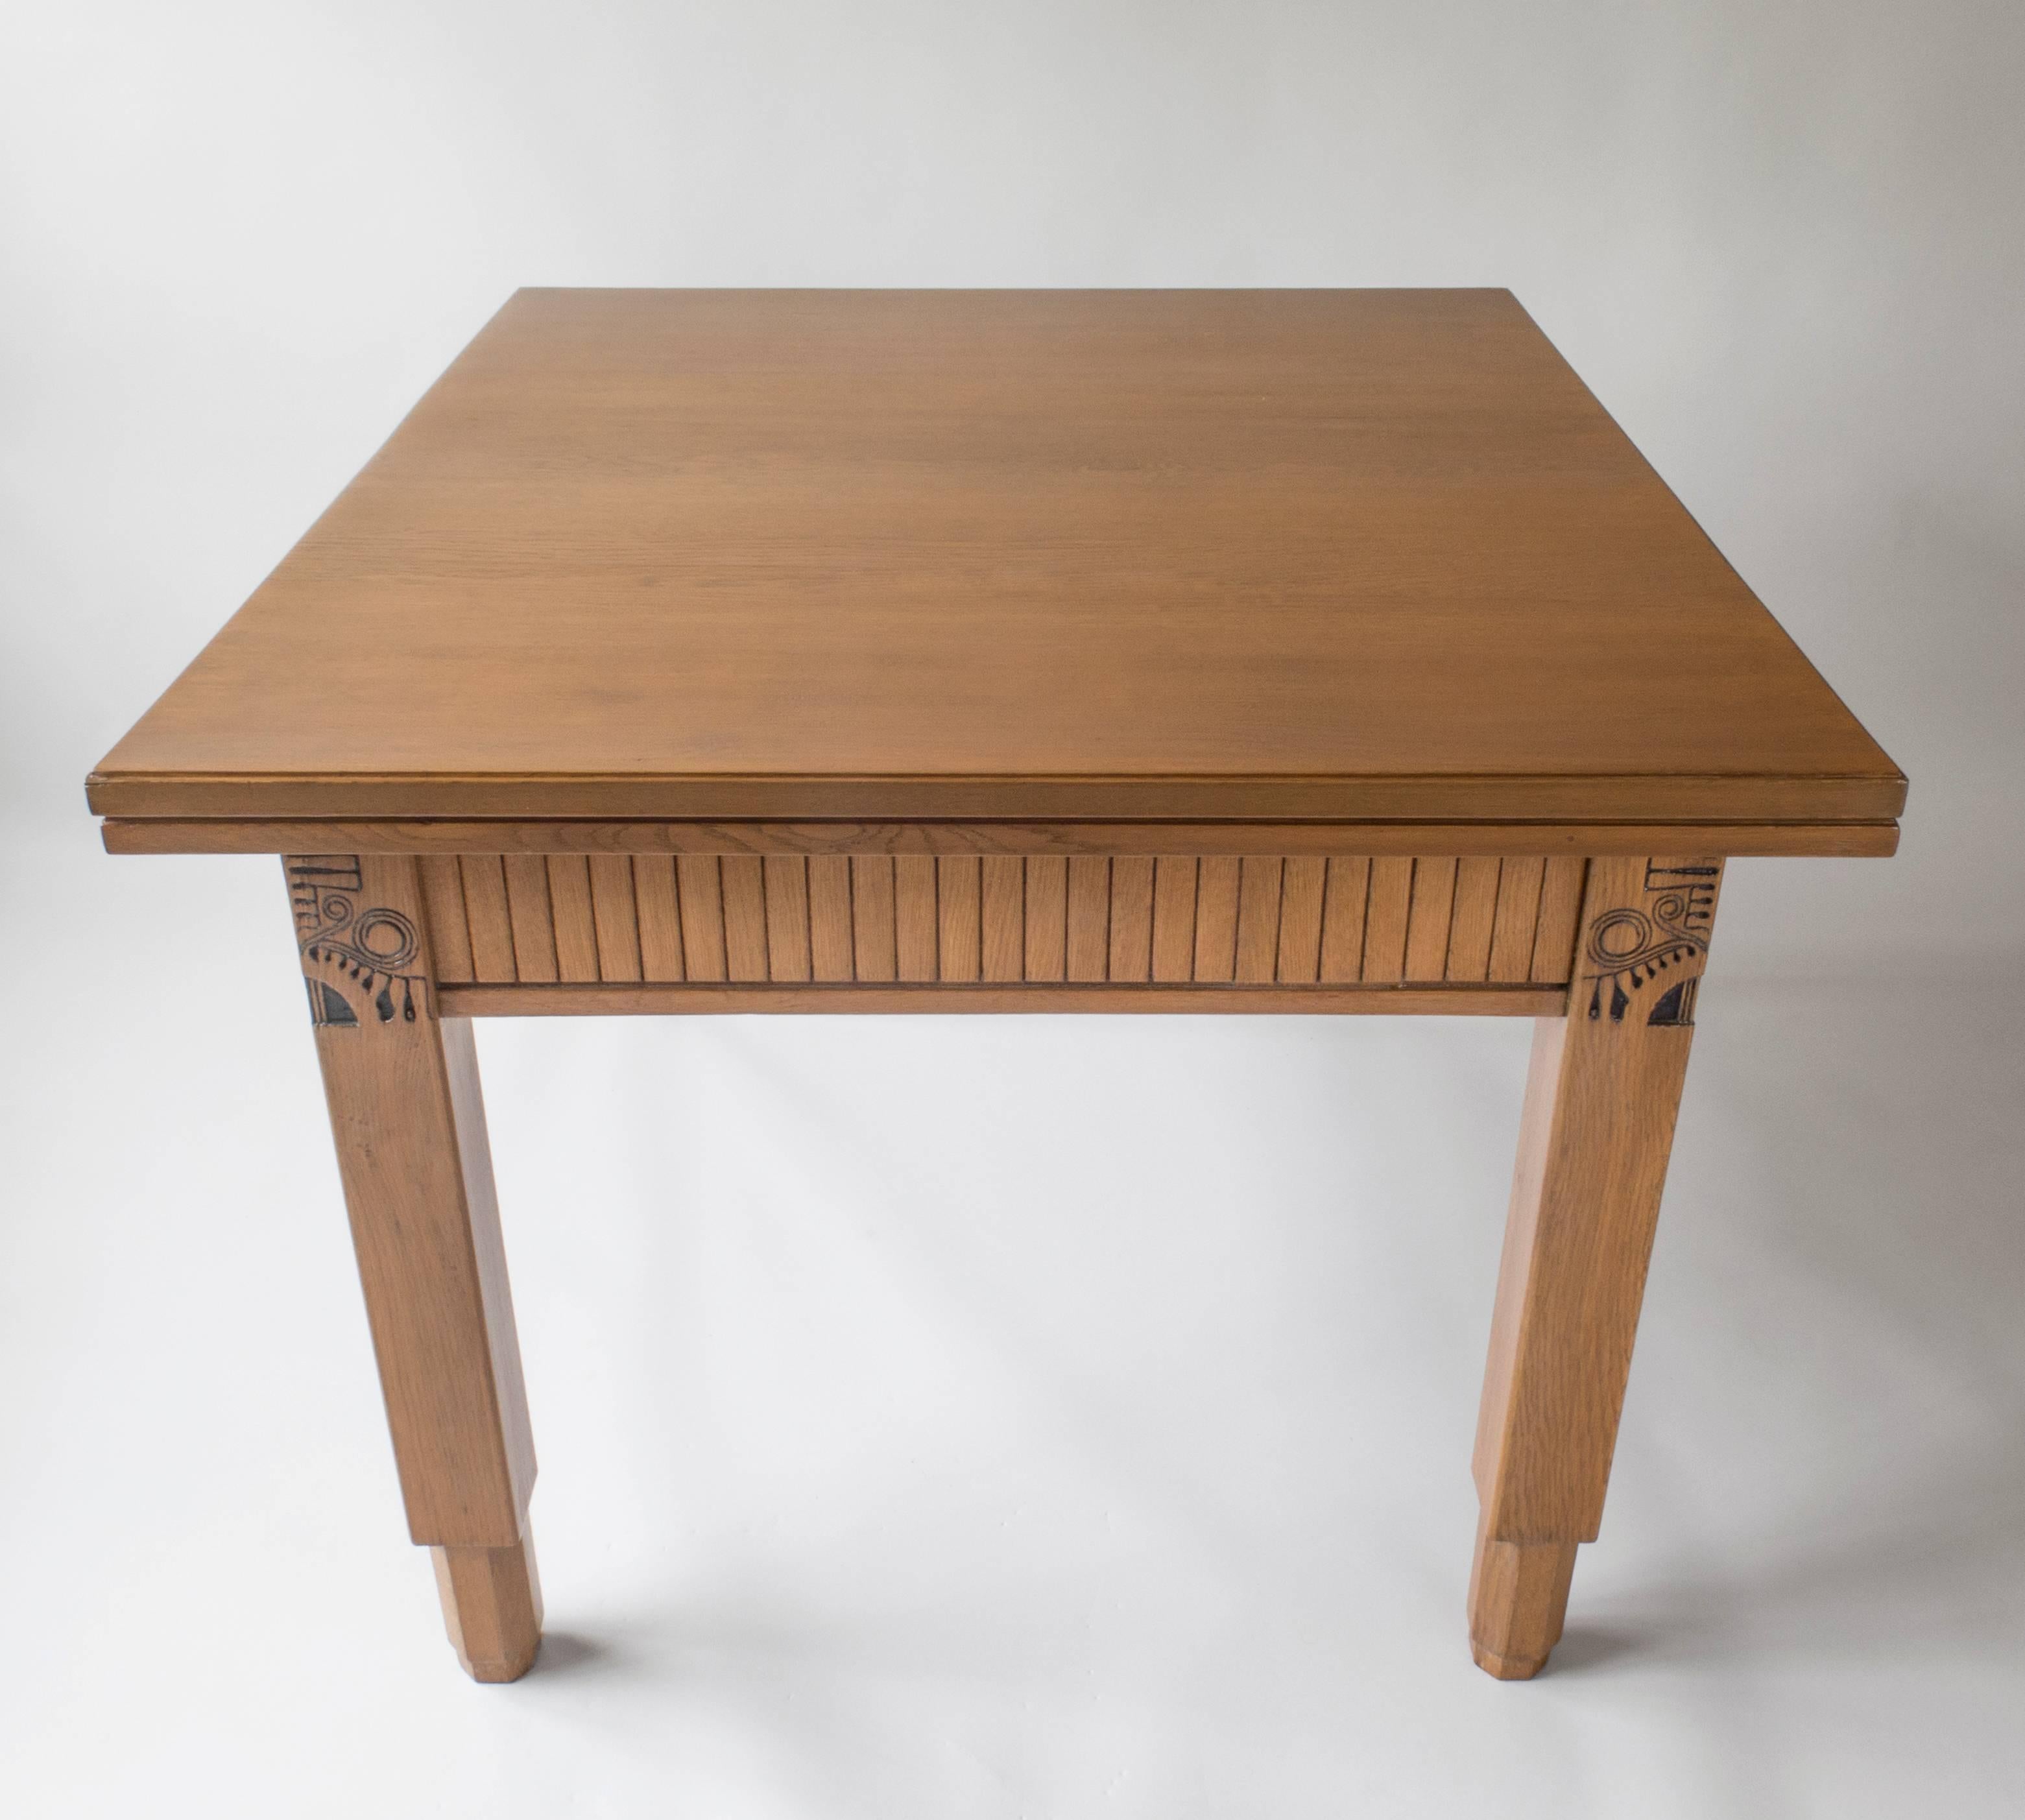 Art Nouveau Manner of Eliel Saarinen, Finnish Intricately Carved Oak Jugend Expandable Table For Sale